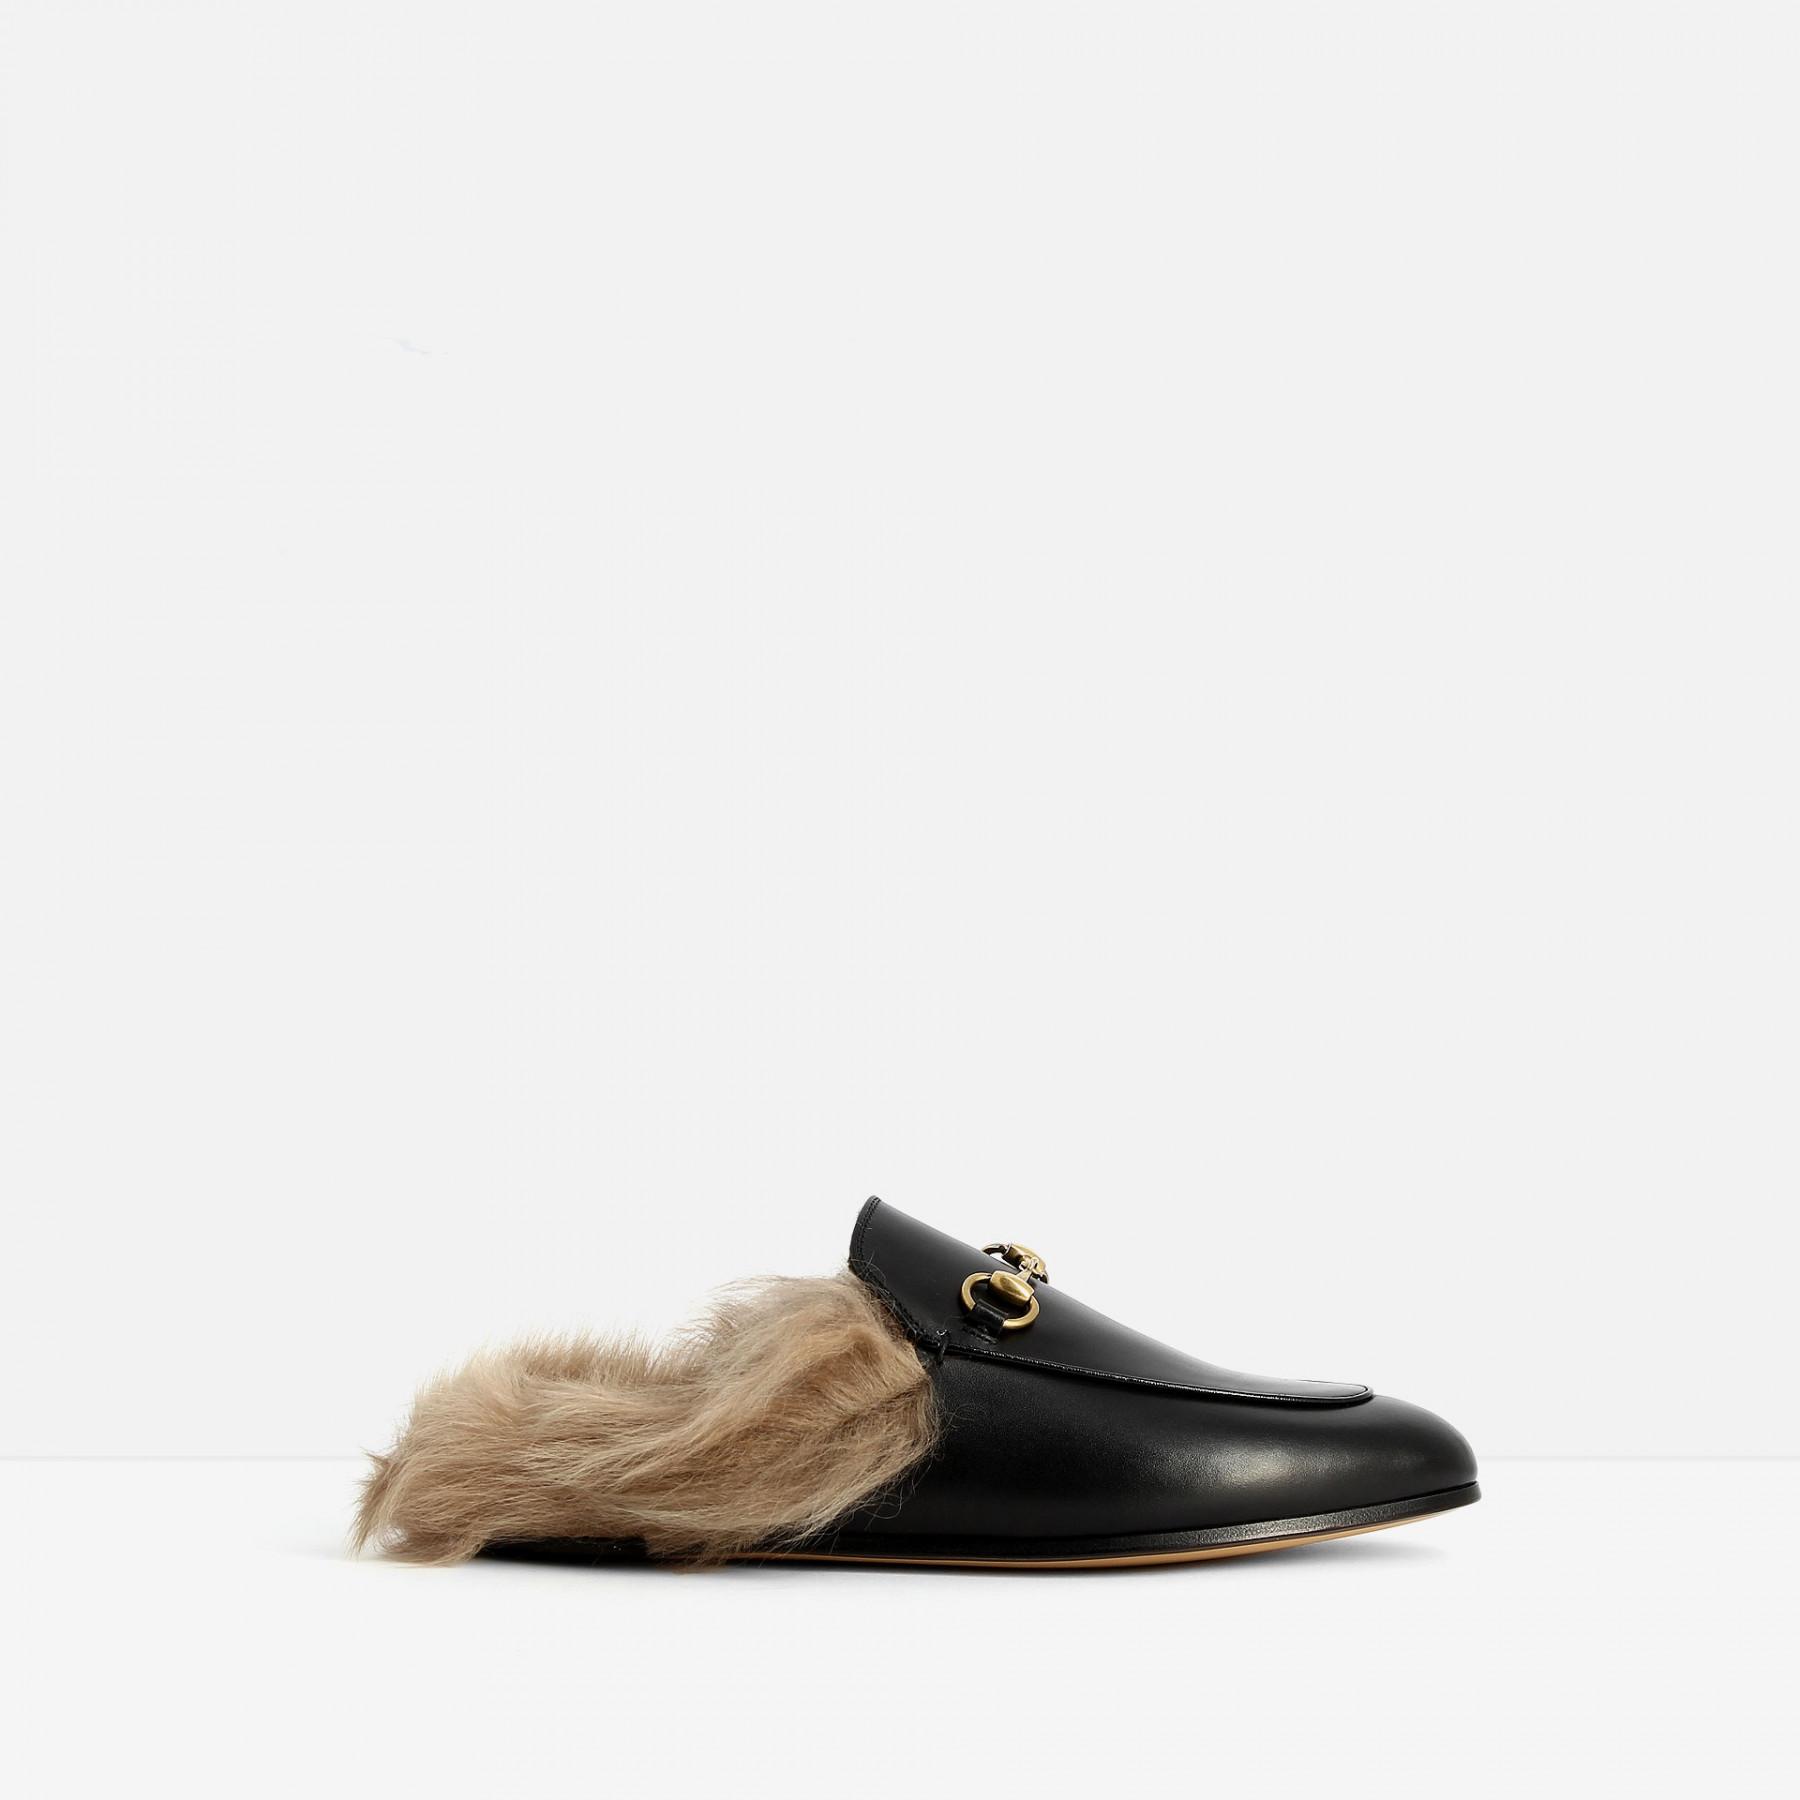 Gucci Fur Princetown Genuine Shearling Loafer Mule in Black - Lyst